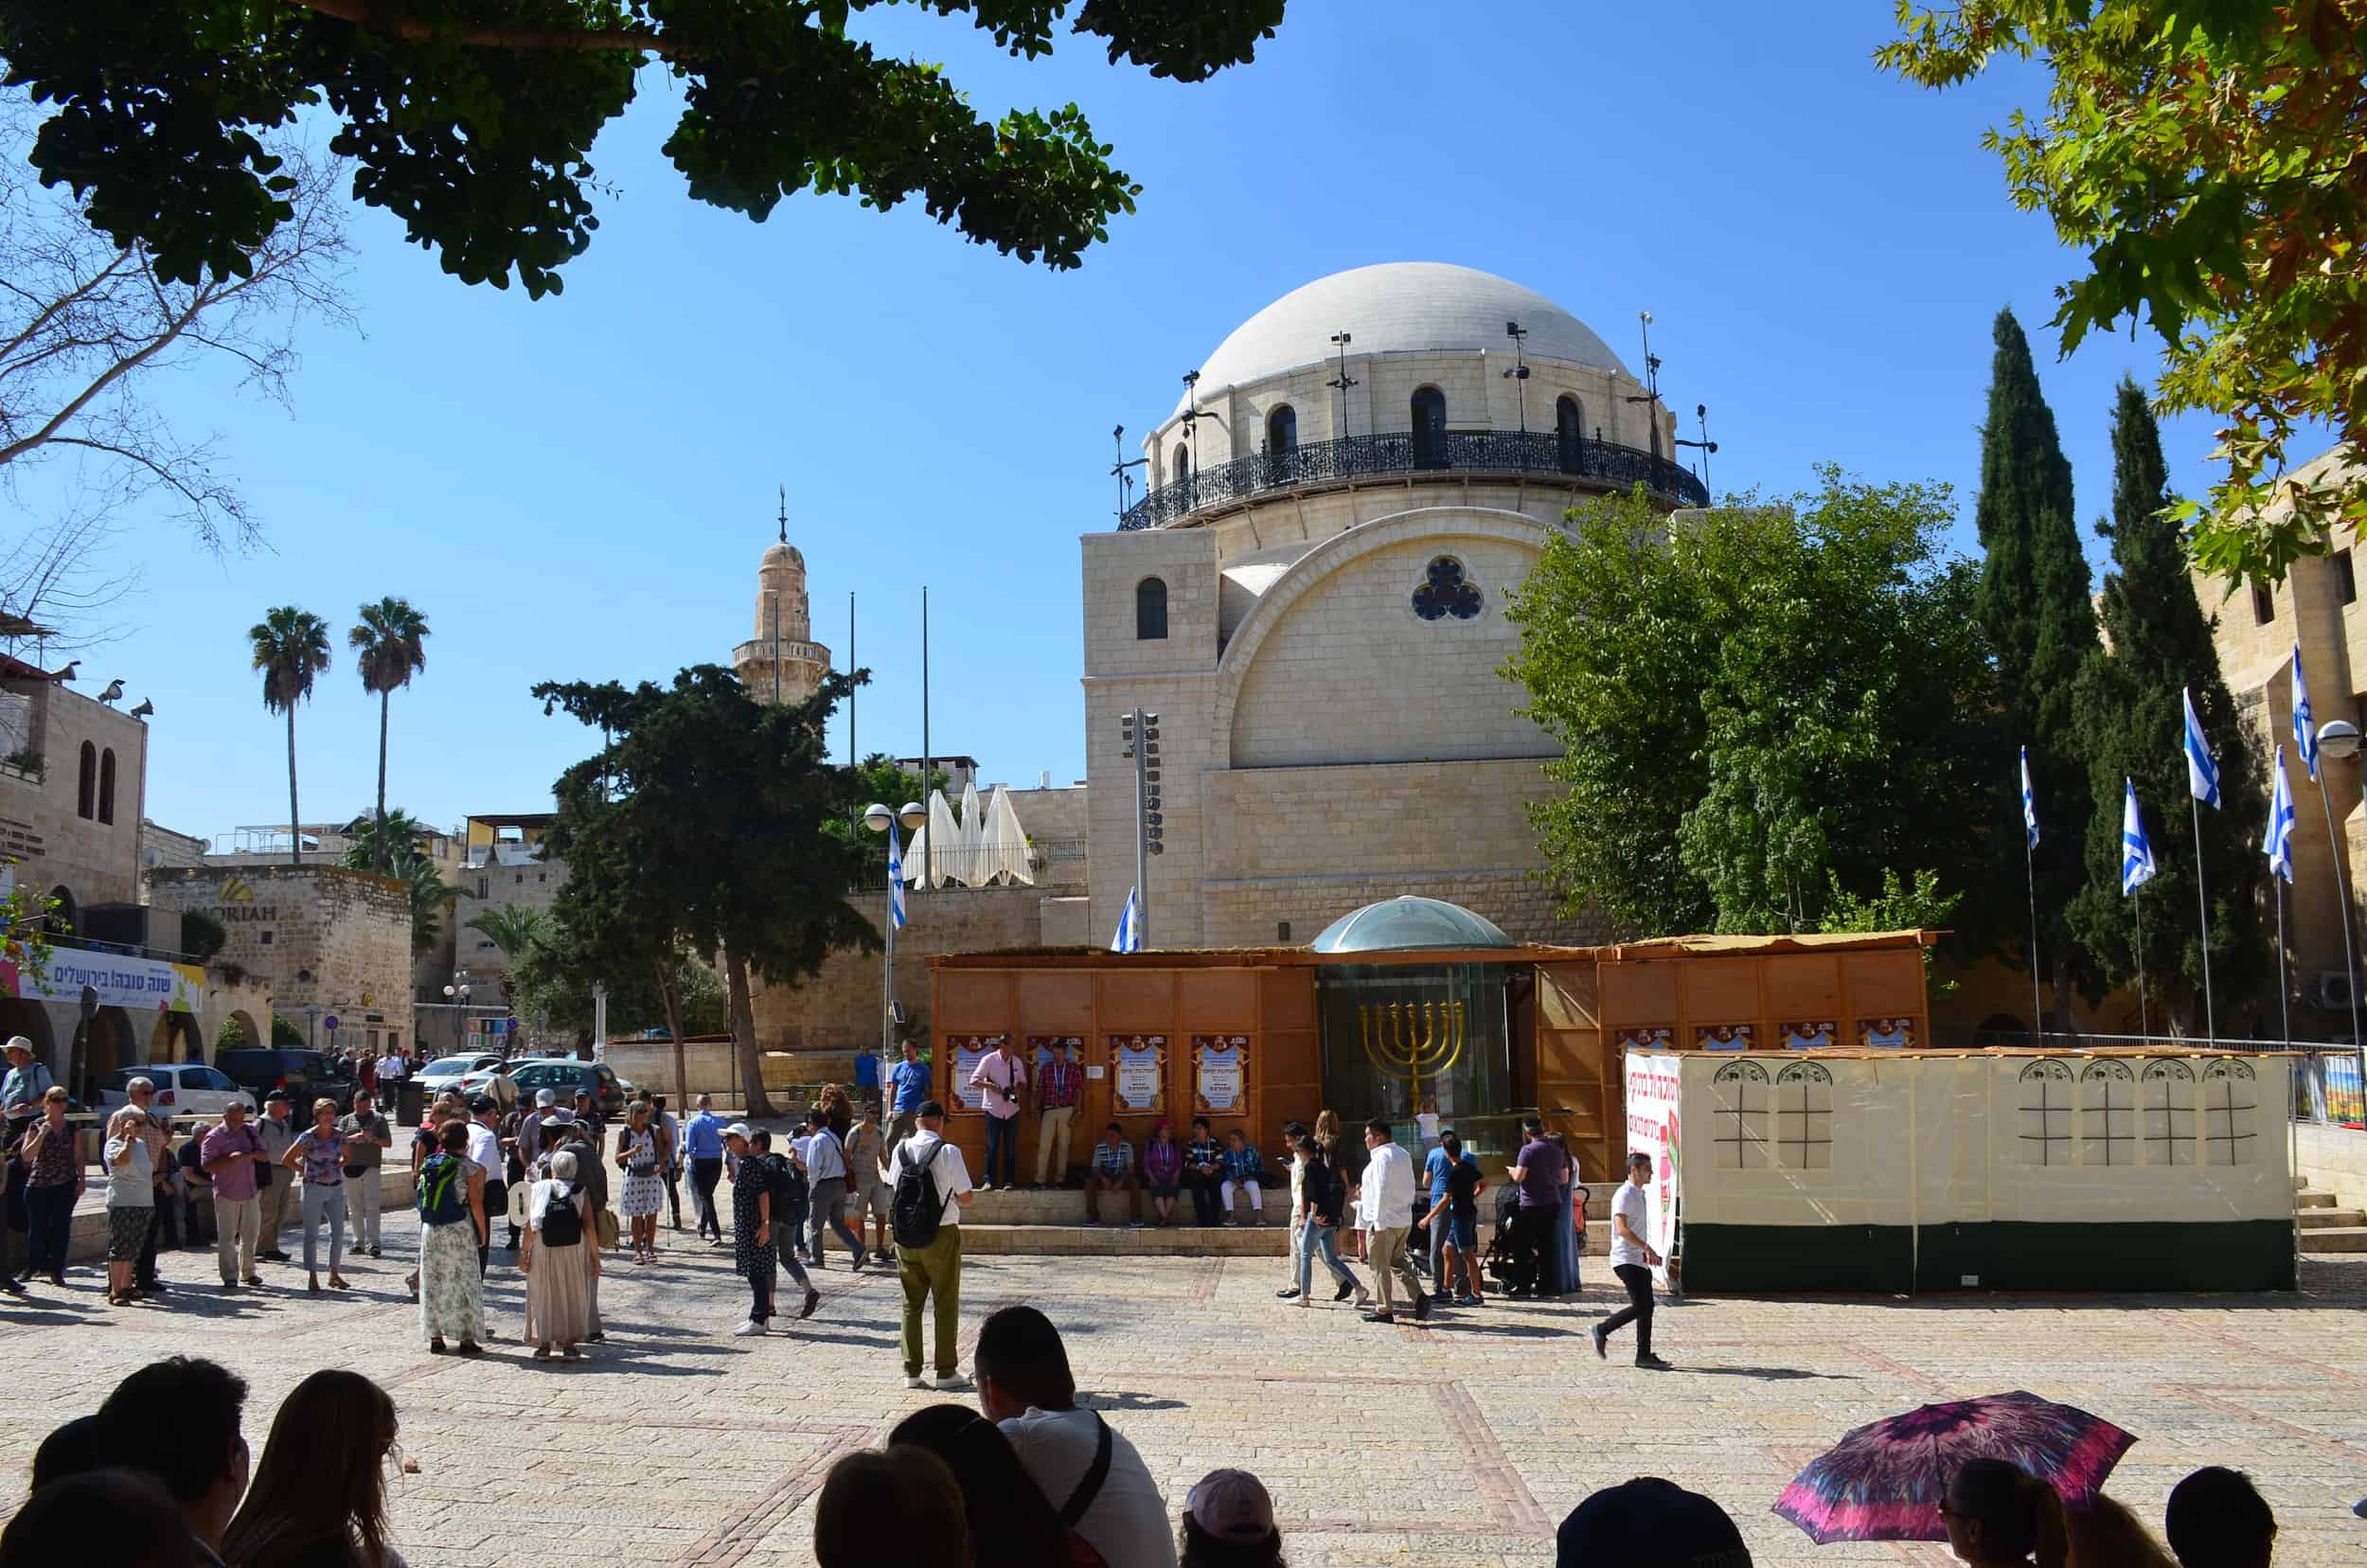 Hurva Square in the Jewish Quarter of Jerusalem